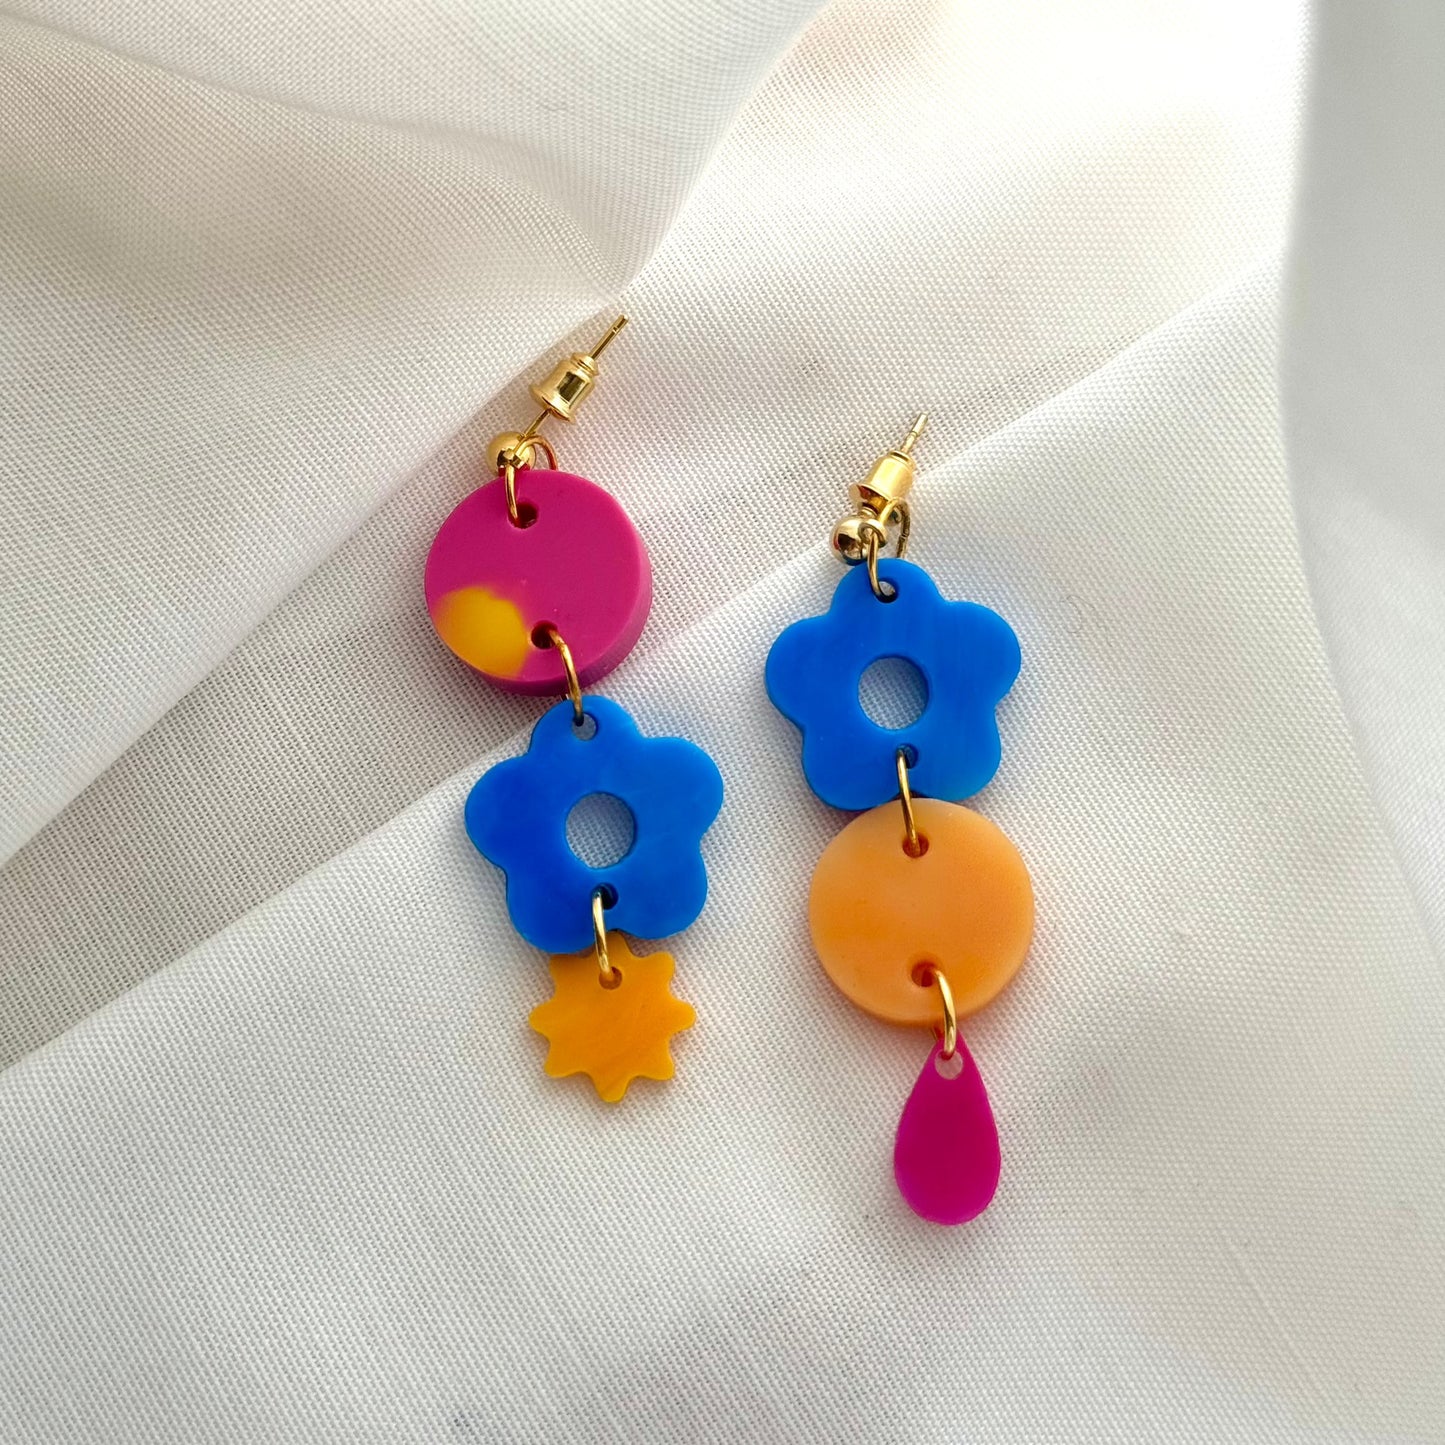 Mini Asymmetrical Flower Drops- Marigold, Turquoise & Hot Pink